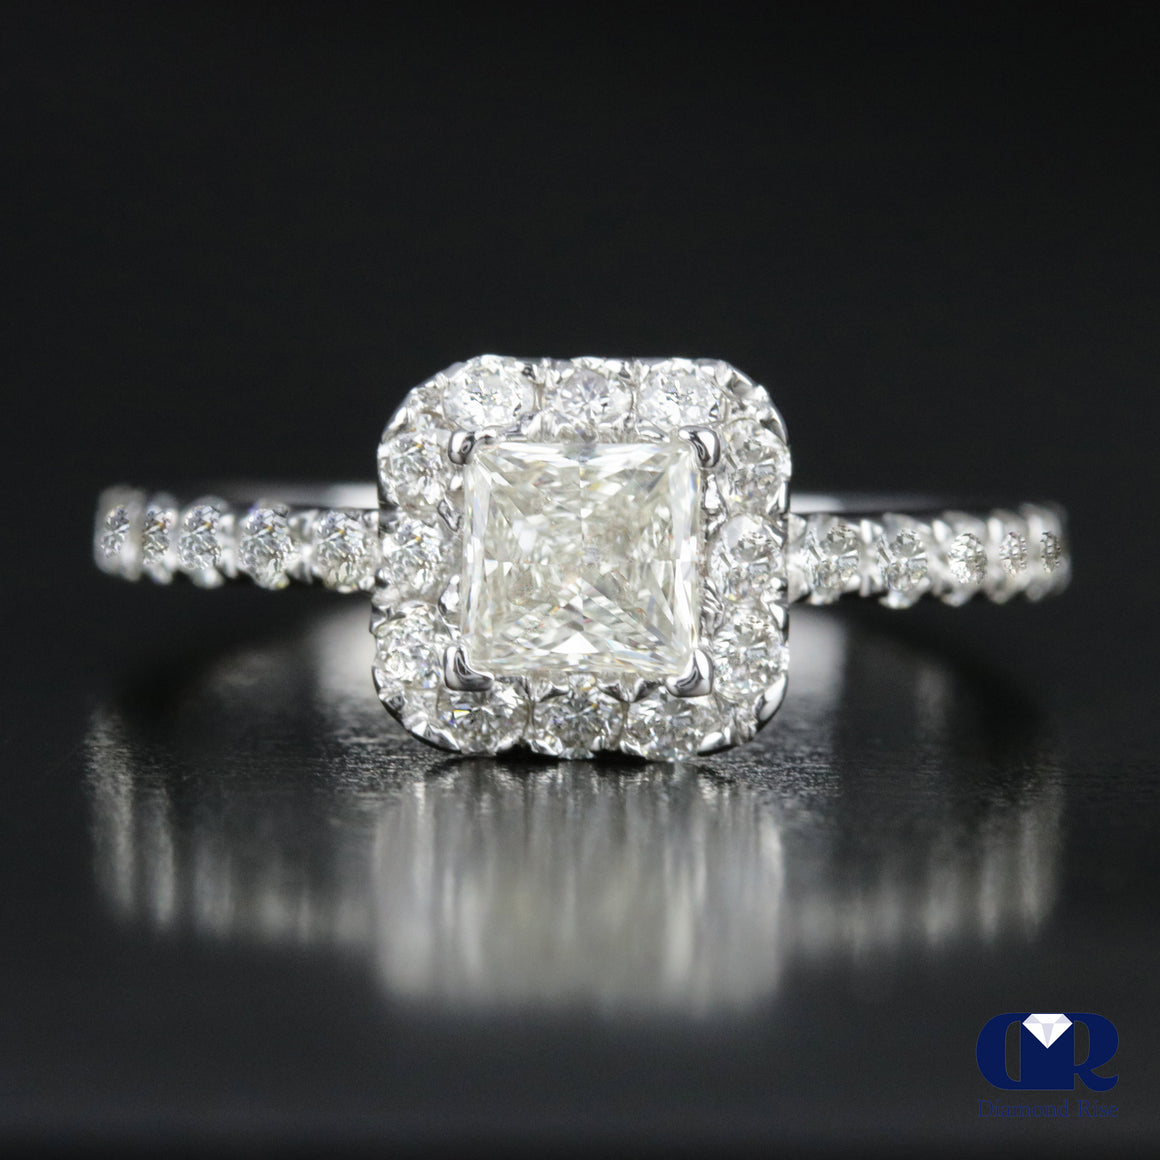 1.00 Carat Princess Cut Diamond Halo Engagement Ring In 14K White Gold - Diamond Rise Jewelry